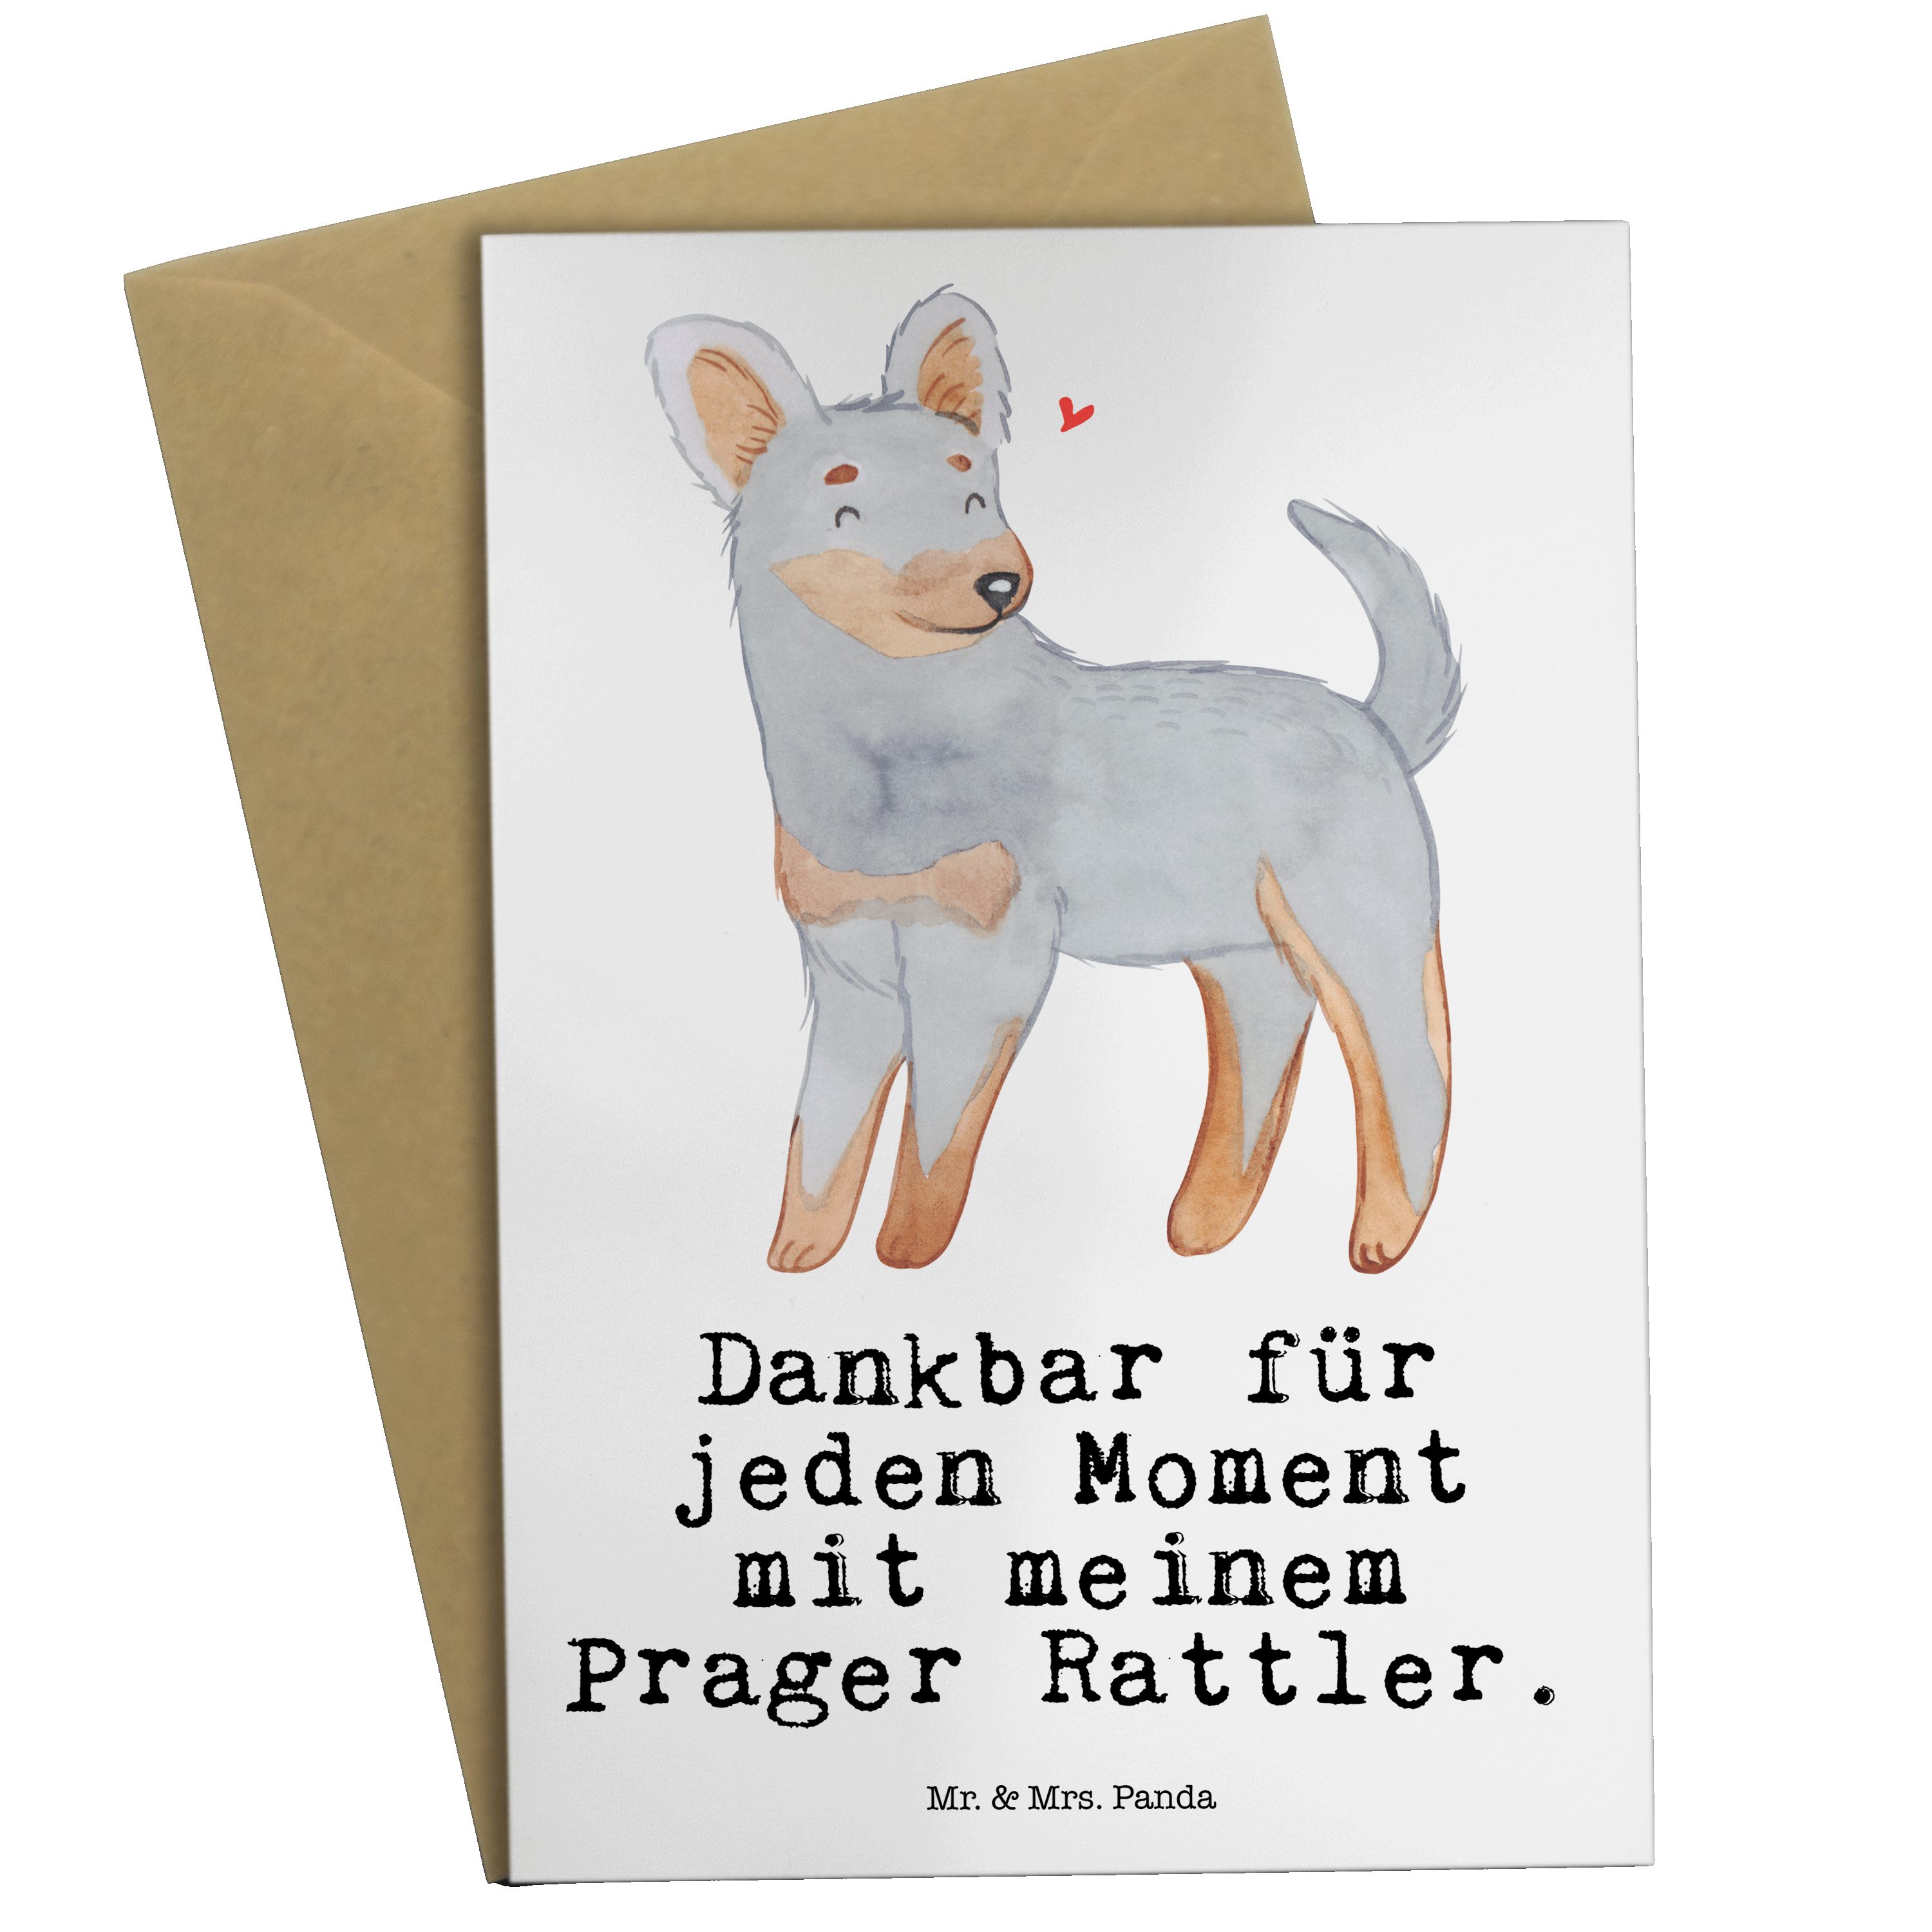 Mr. & Mrs. Panda Grußkarte Prager Rattler Moment - Weiß - Geschenk, Glückwunschkarte, Hunderasse